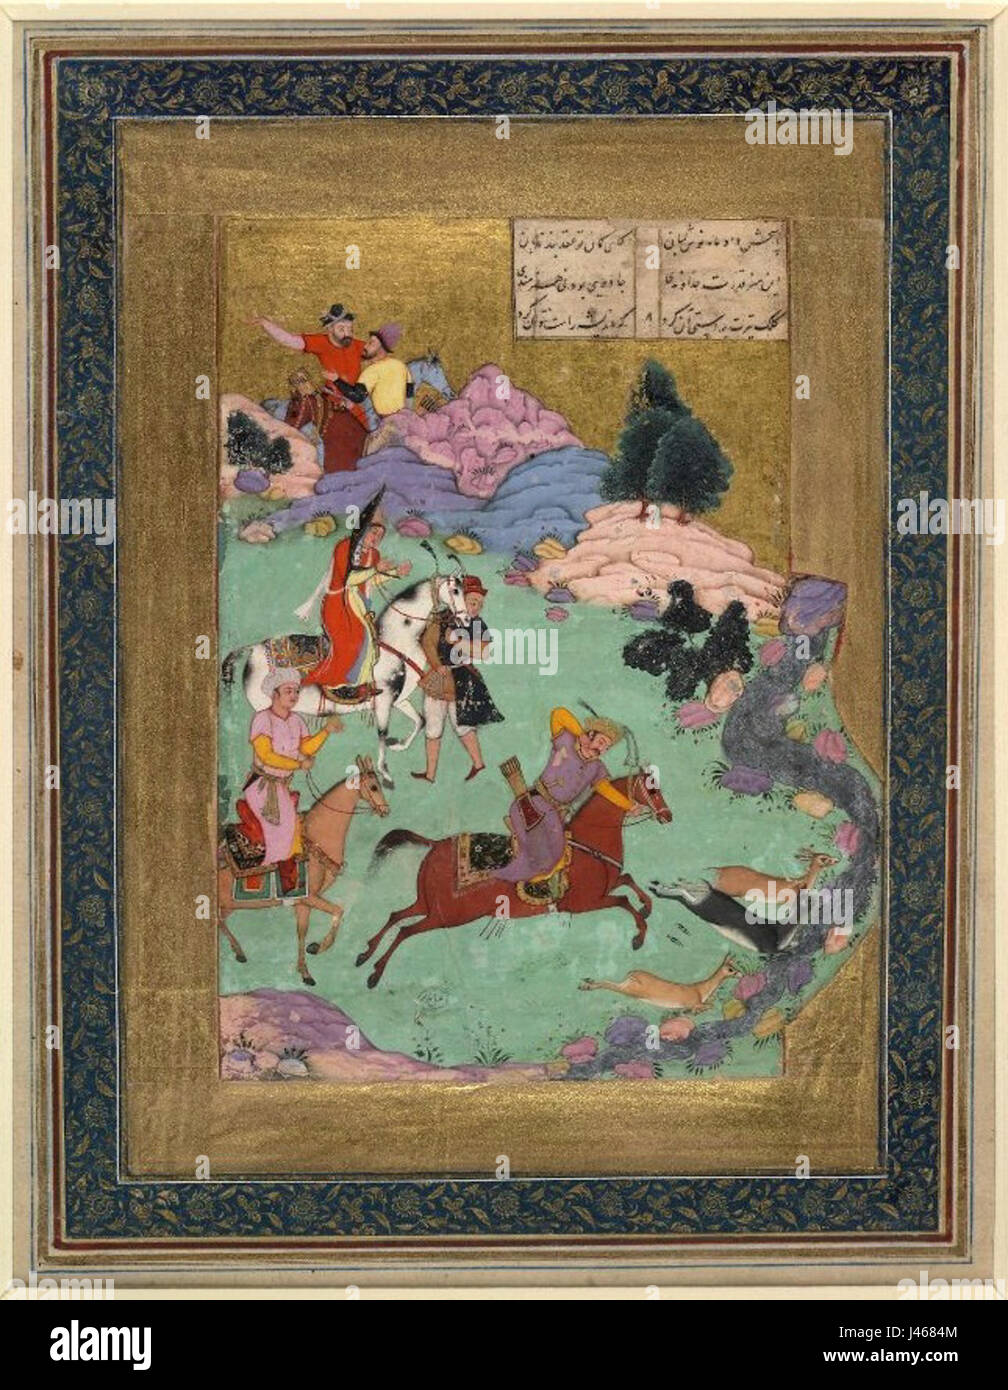 Painting depicts Bahram Gur (central figure) on horseback hunting three doe, from a Khamseh of Amir Khusrau Dihlavi. Stock Photo